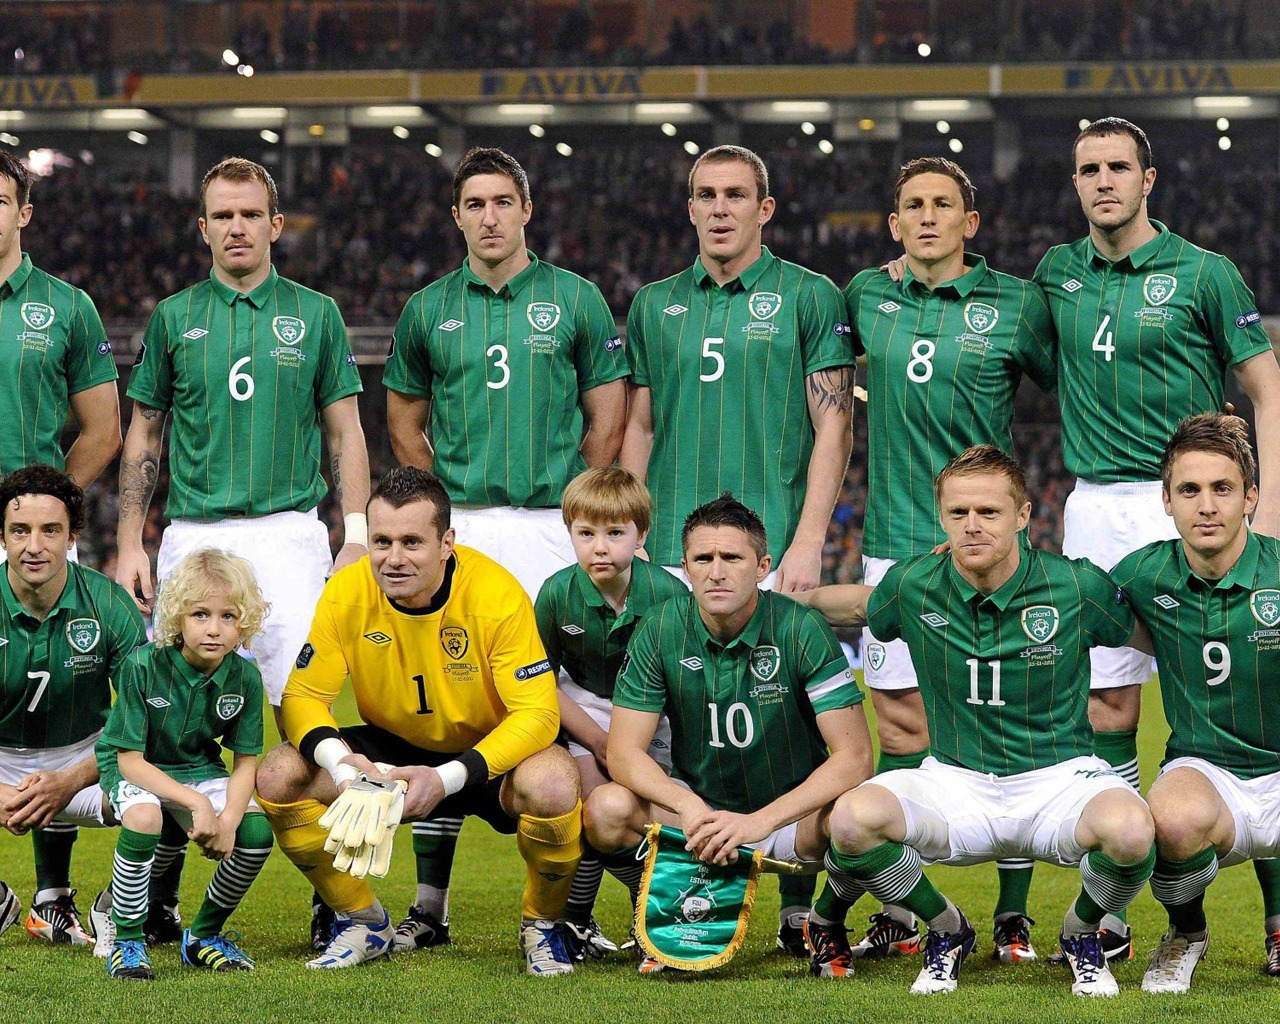 Ireland National Team for 1280 x 1024 resolution